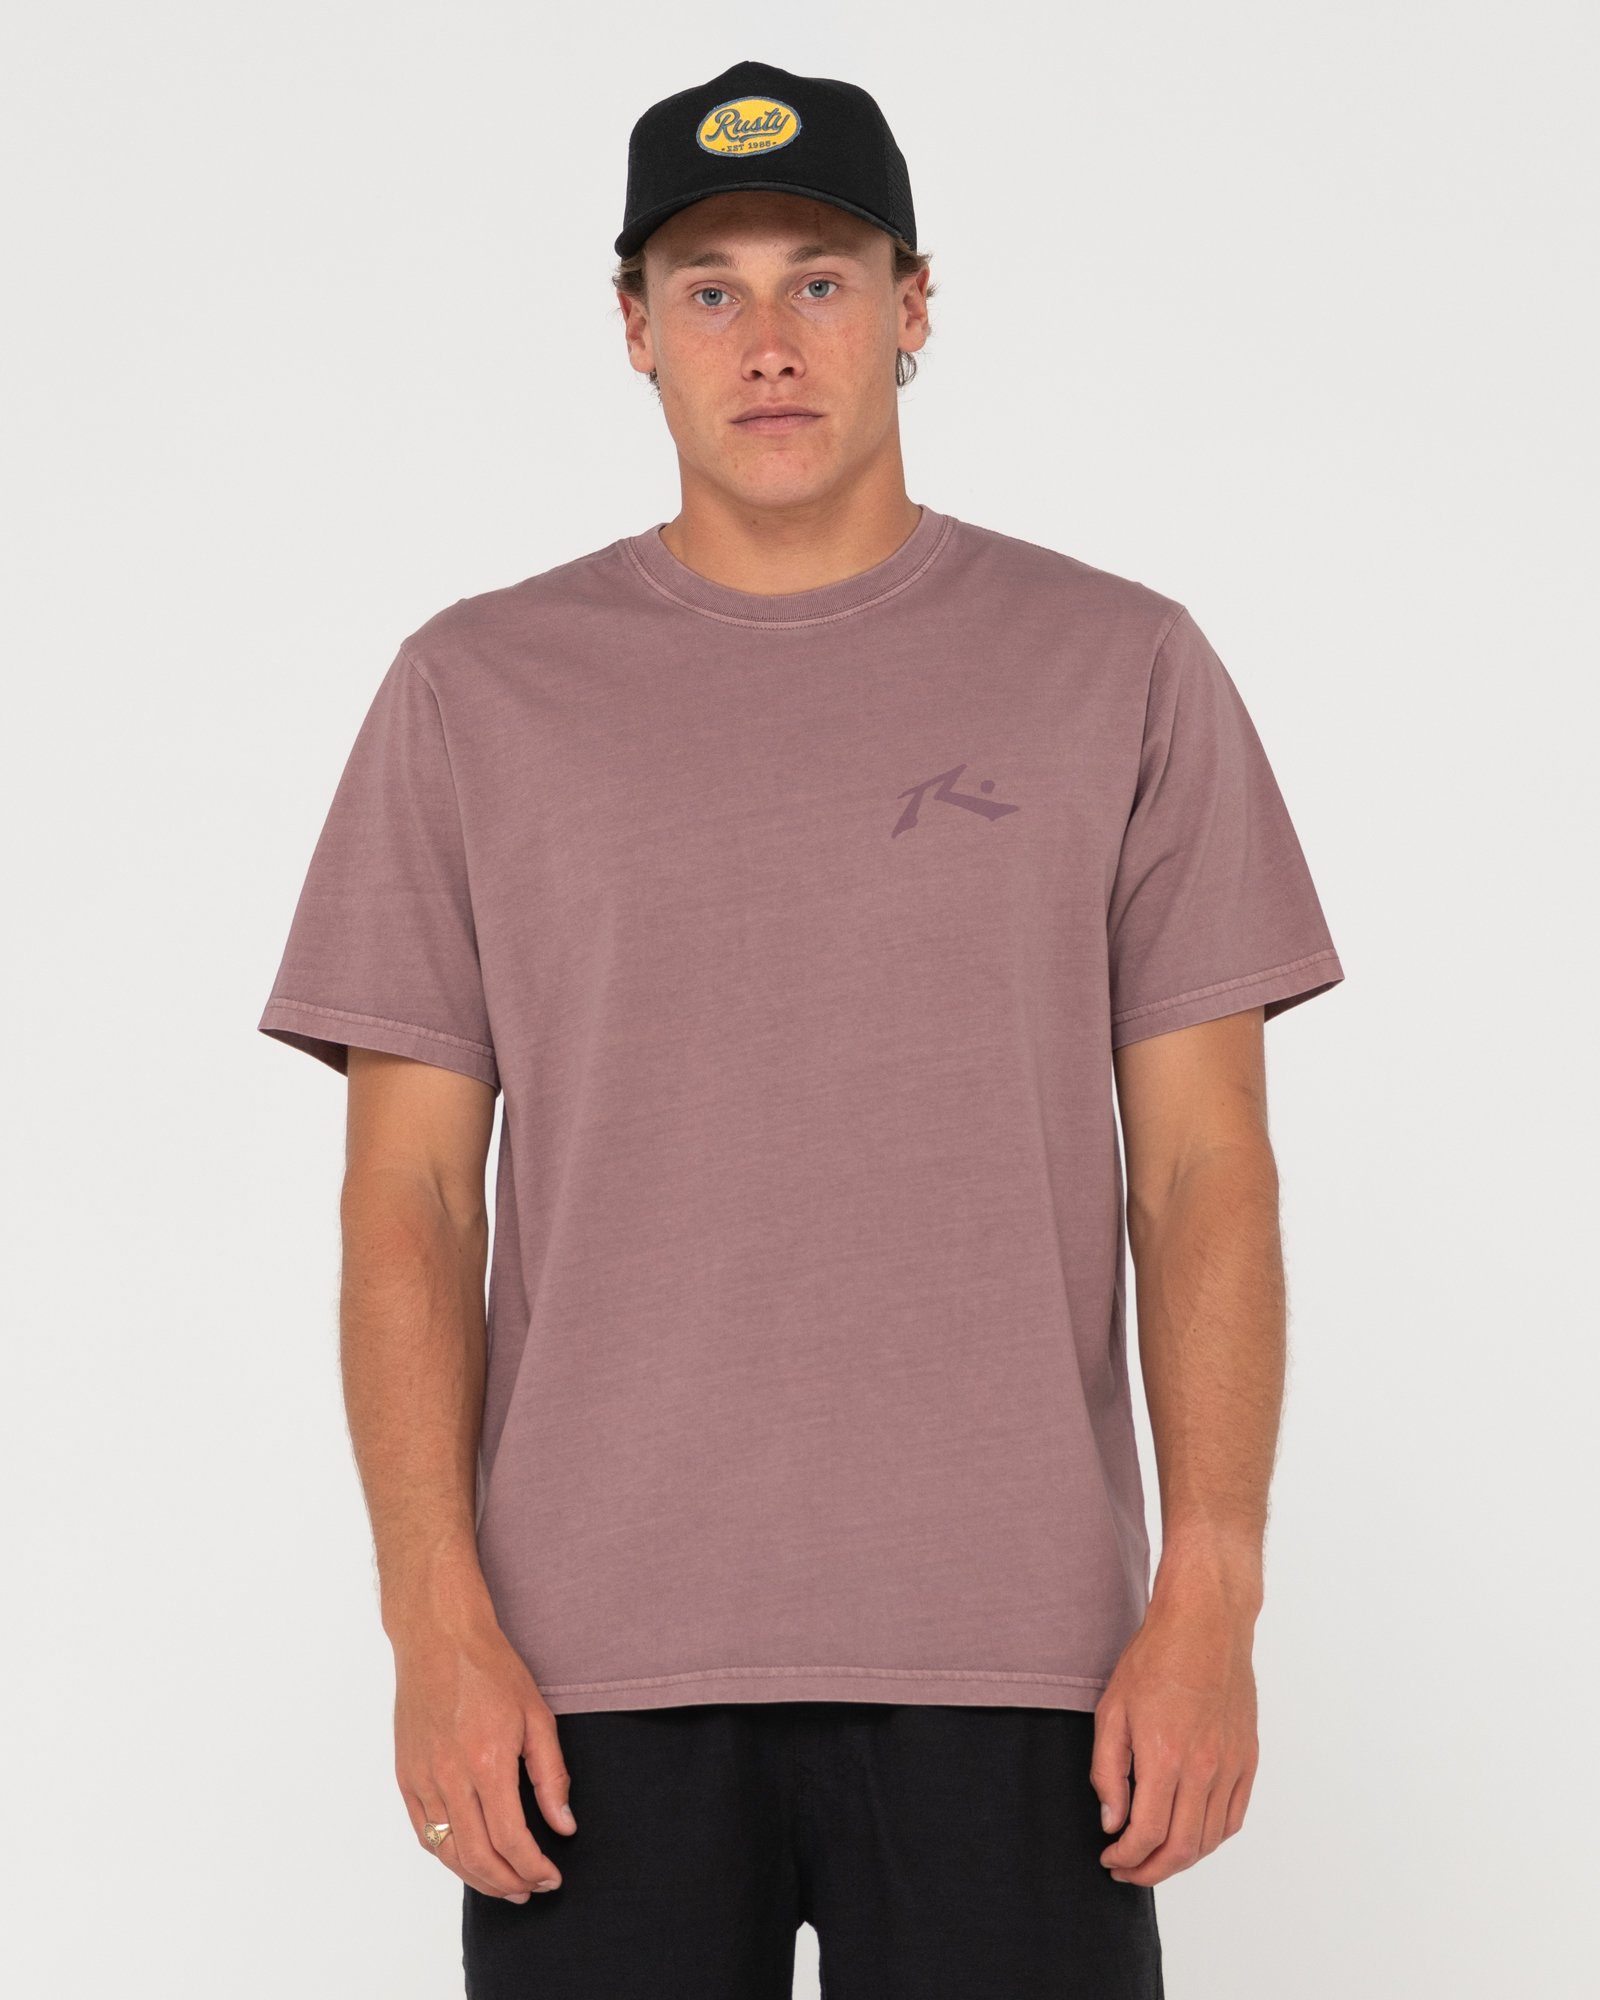 TEE Rusty Rain SHORT Purple SLEEVE WASH T-Shirt COMP